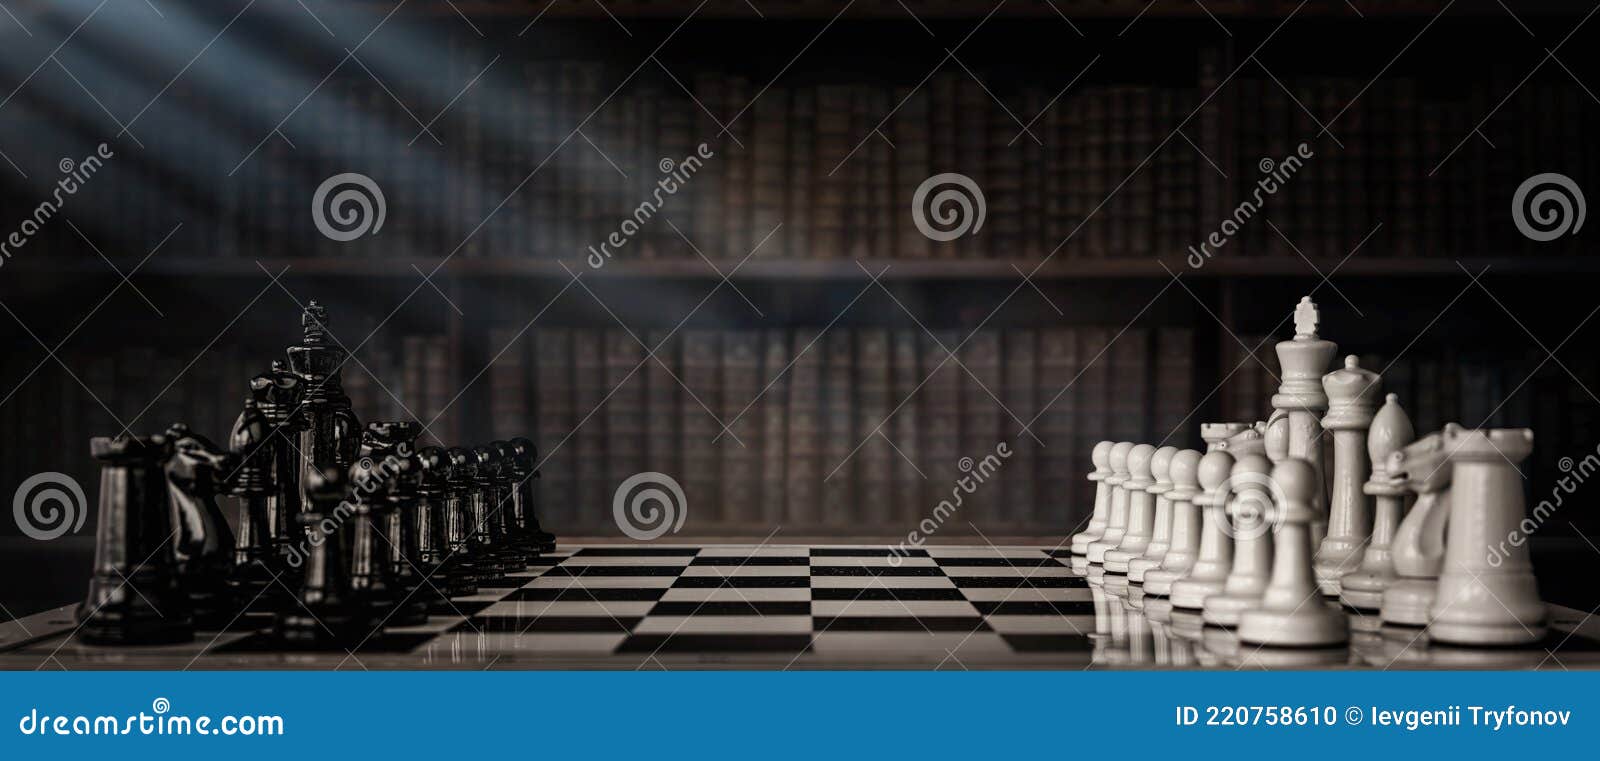 Conjunto de figuras de xadrez para jogo de tabuleiro de estratégia de xadrez  figuras de xadrez pretas, brancas e douradas